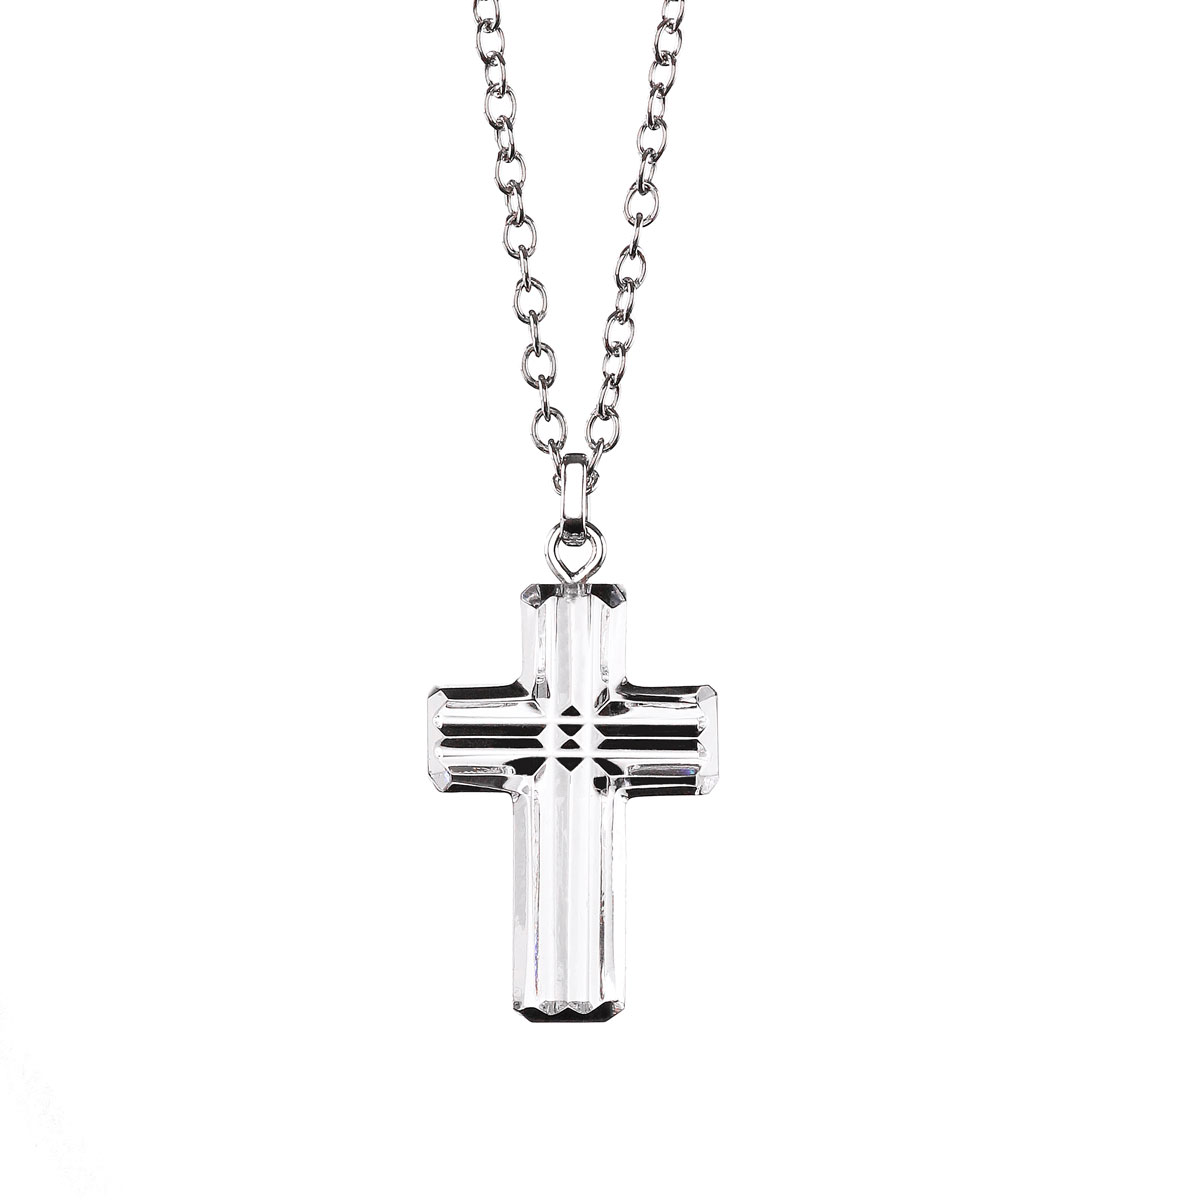 Cashs Ireland, St. Brigid's Cross Crystal Pendant Necklace, Medium